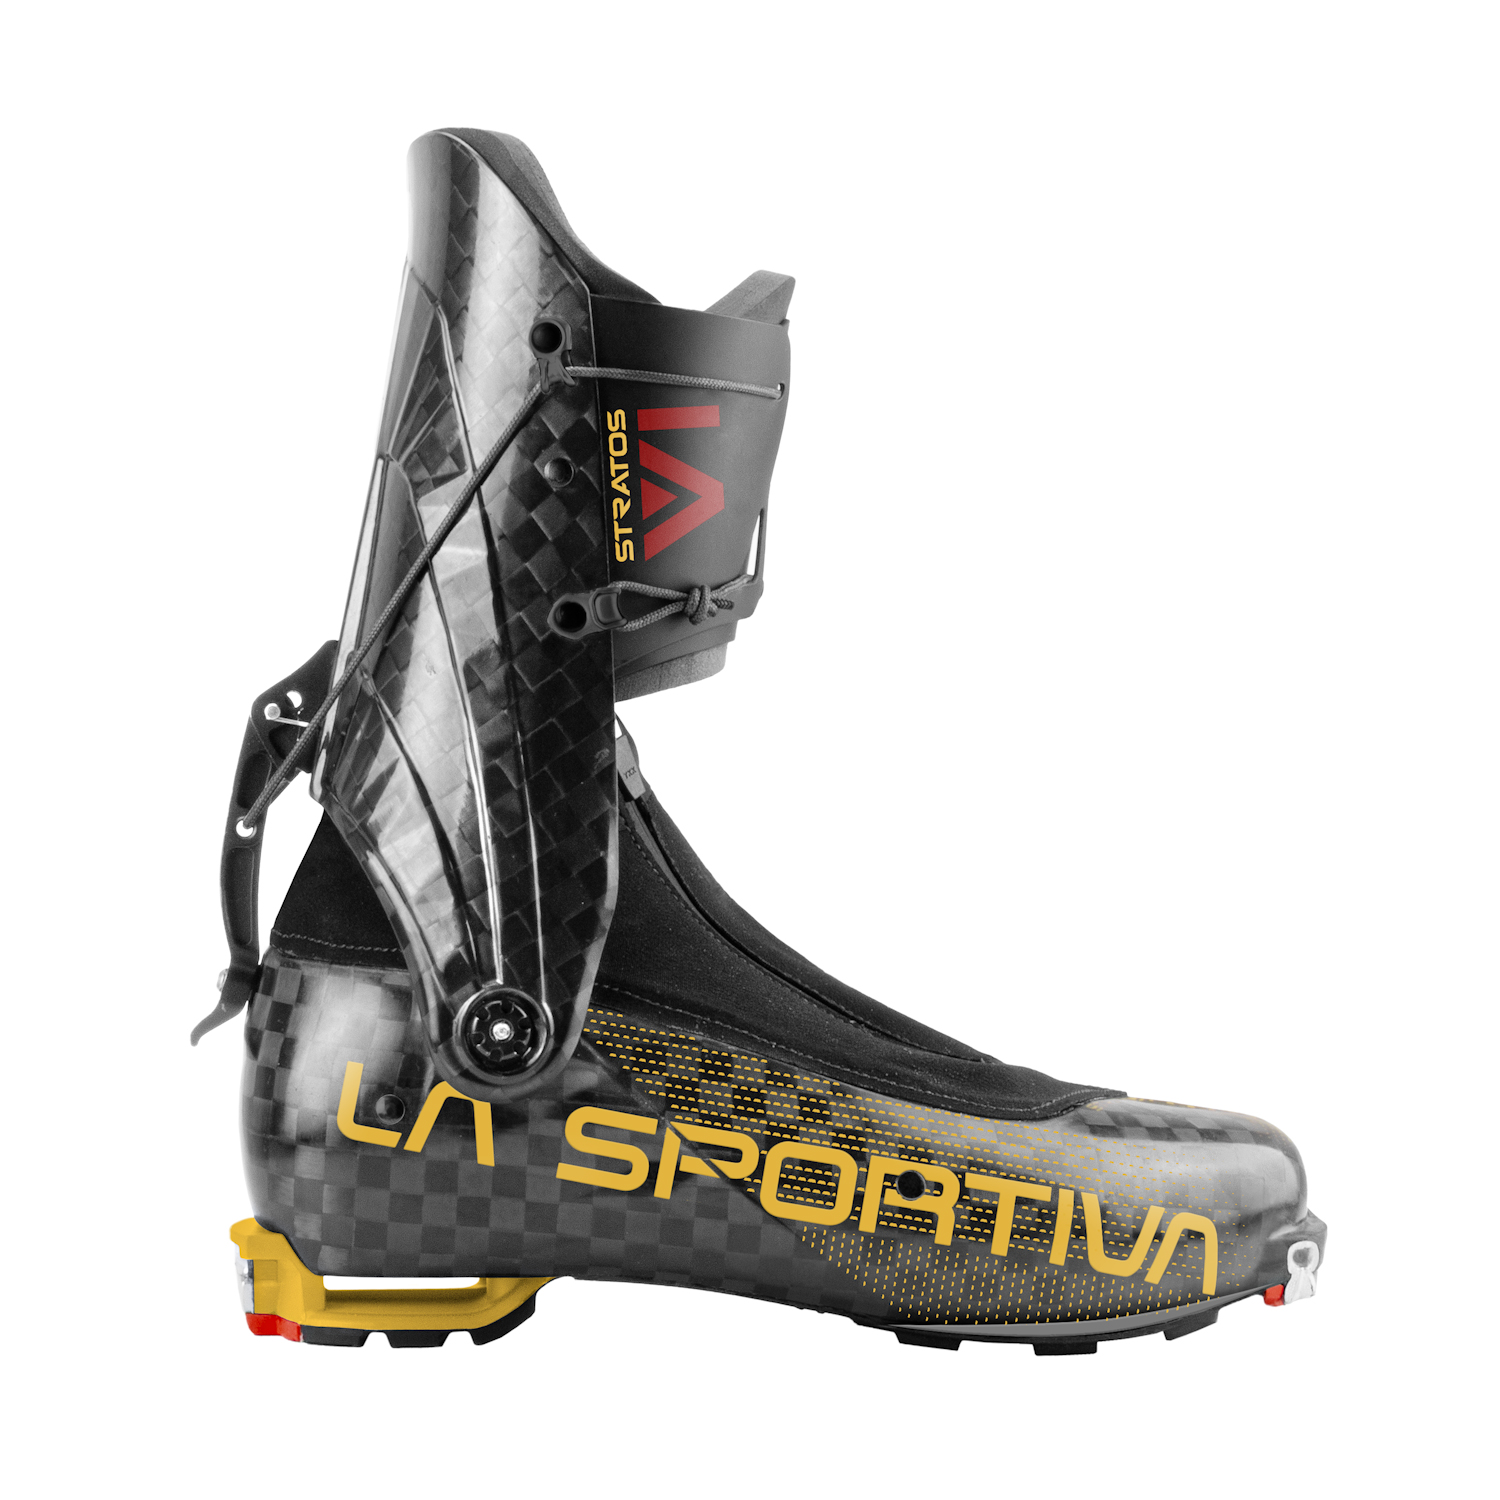 La Sportiva skiboots Stratos VI